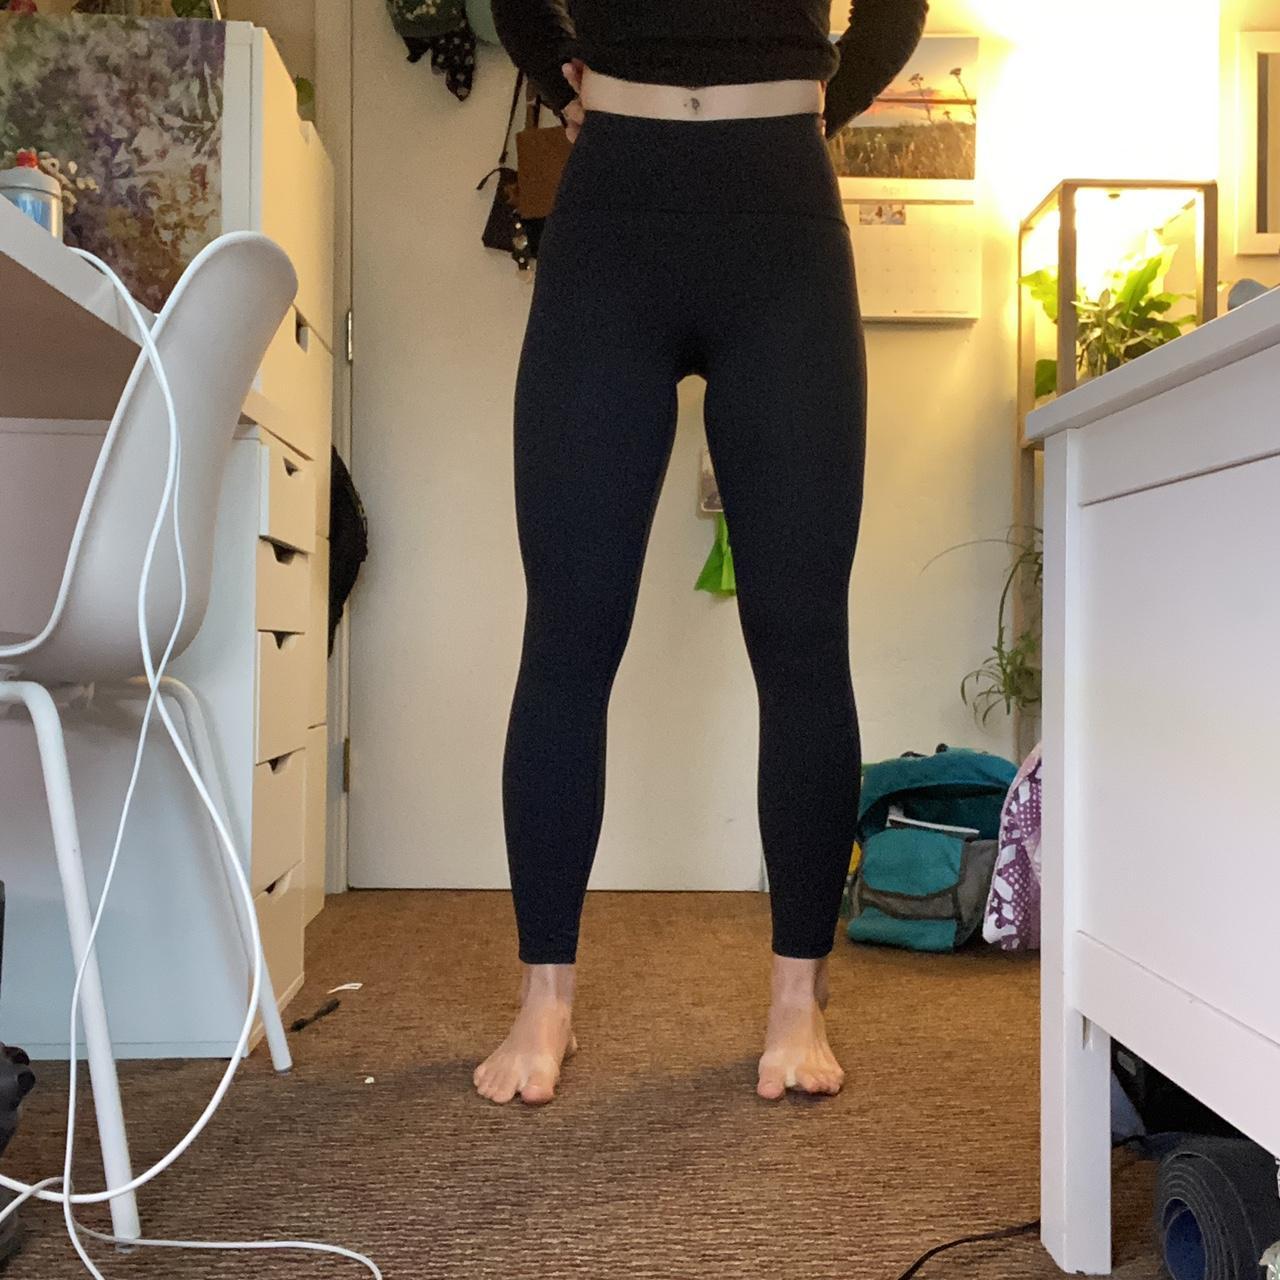 Lululemon black leggings 7/8 25” size 4. These are